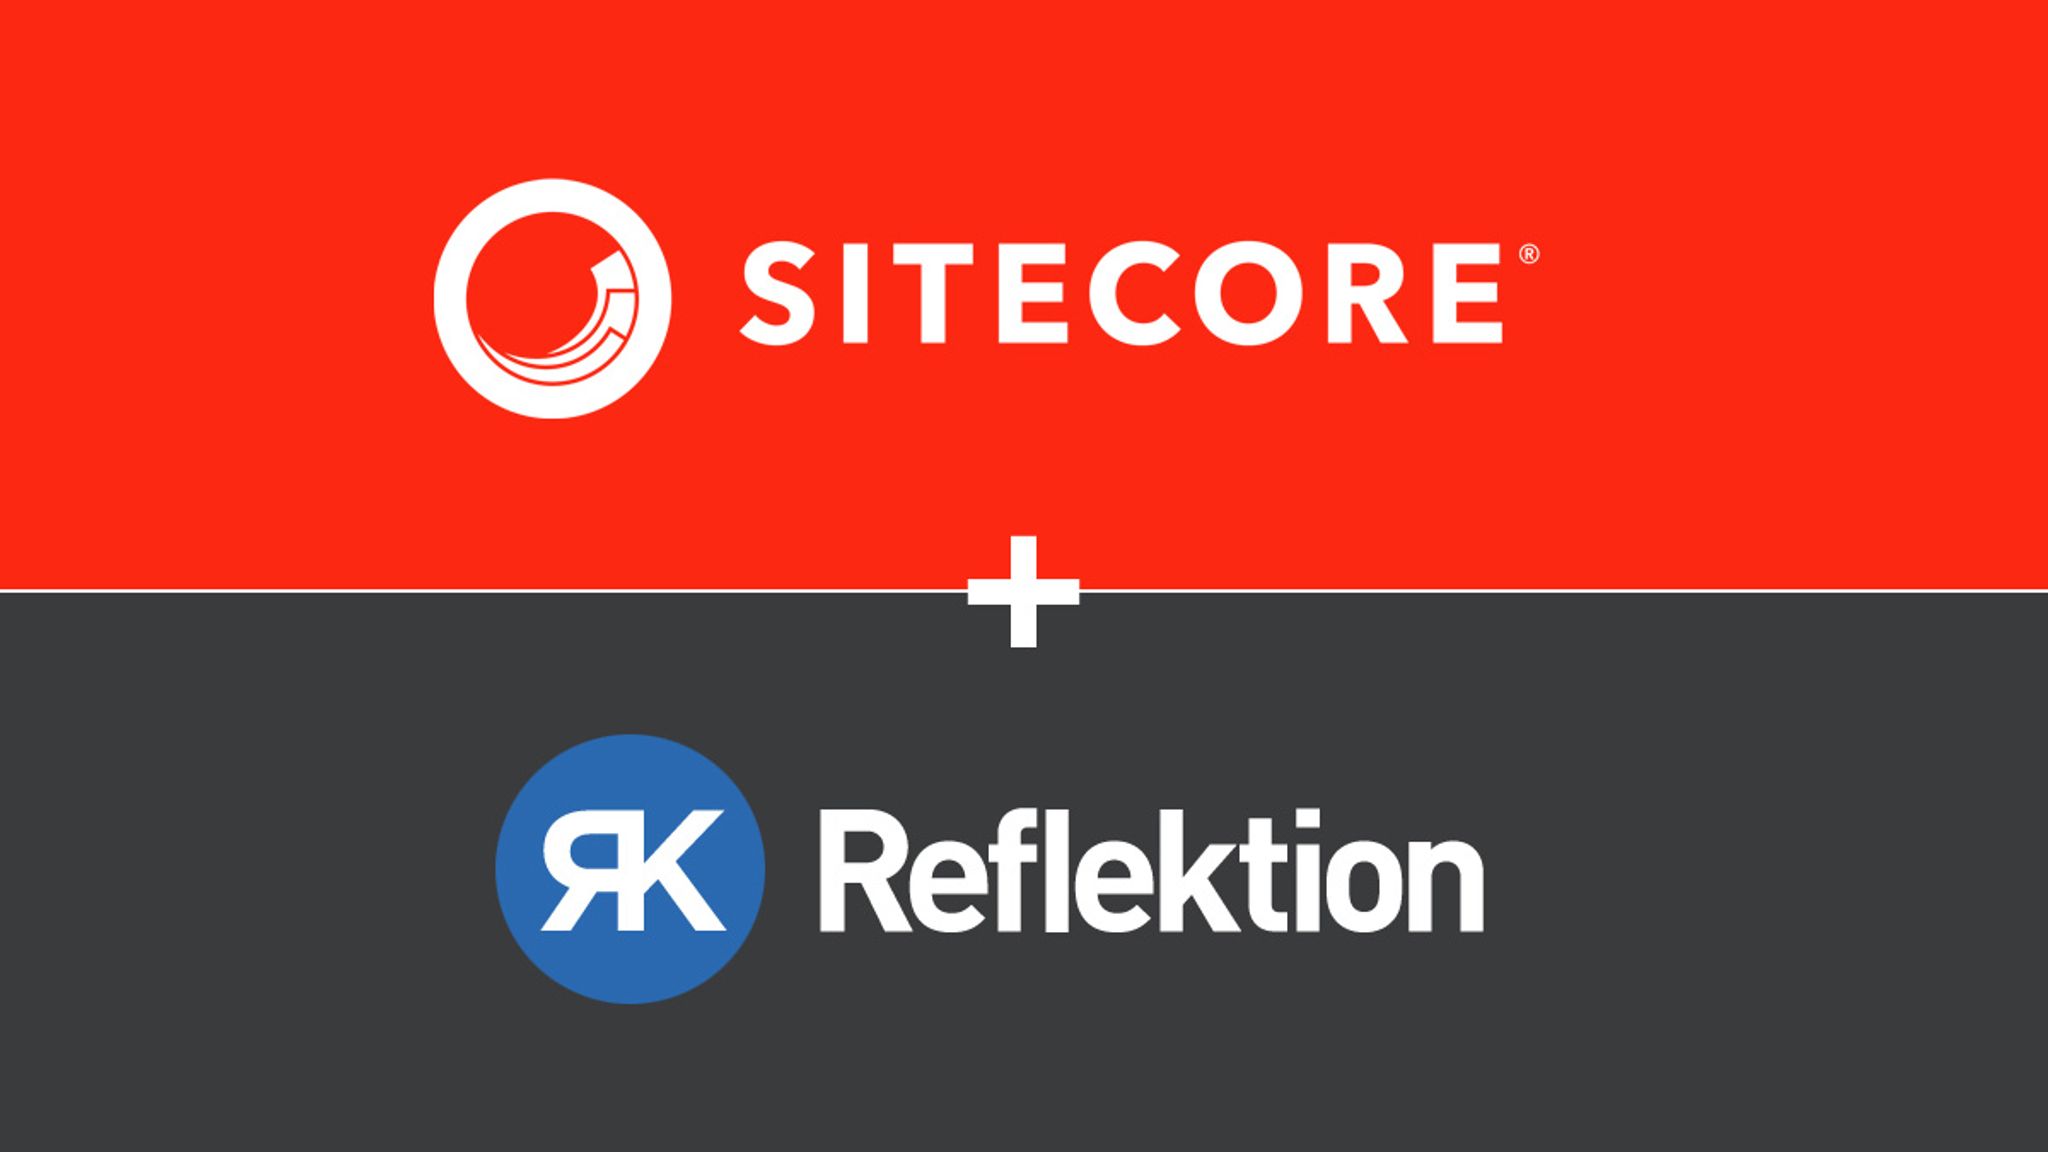 Sitecore and Reflektion logos